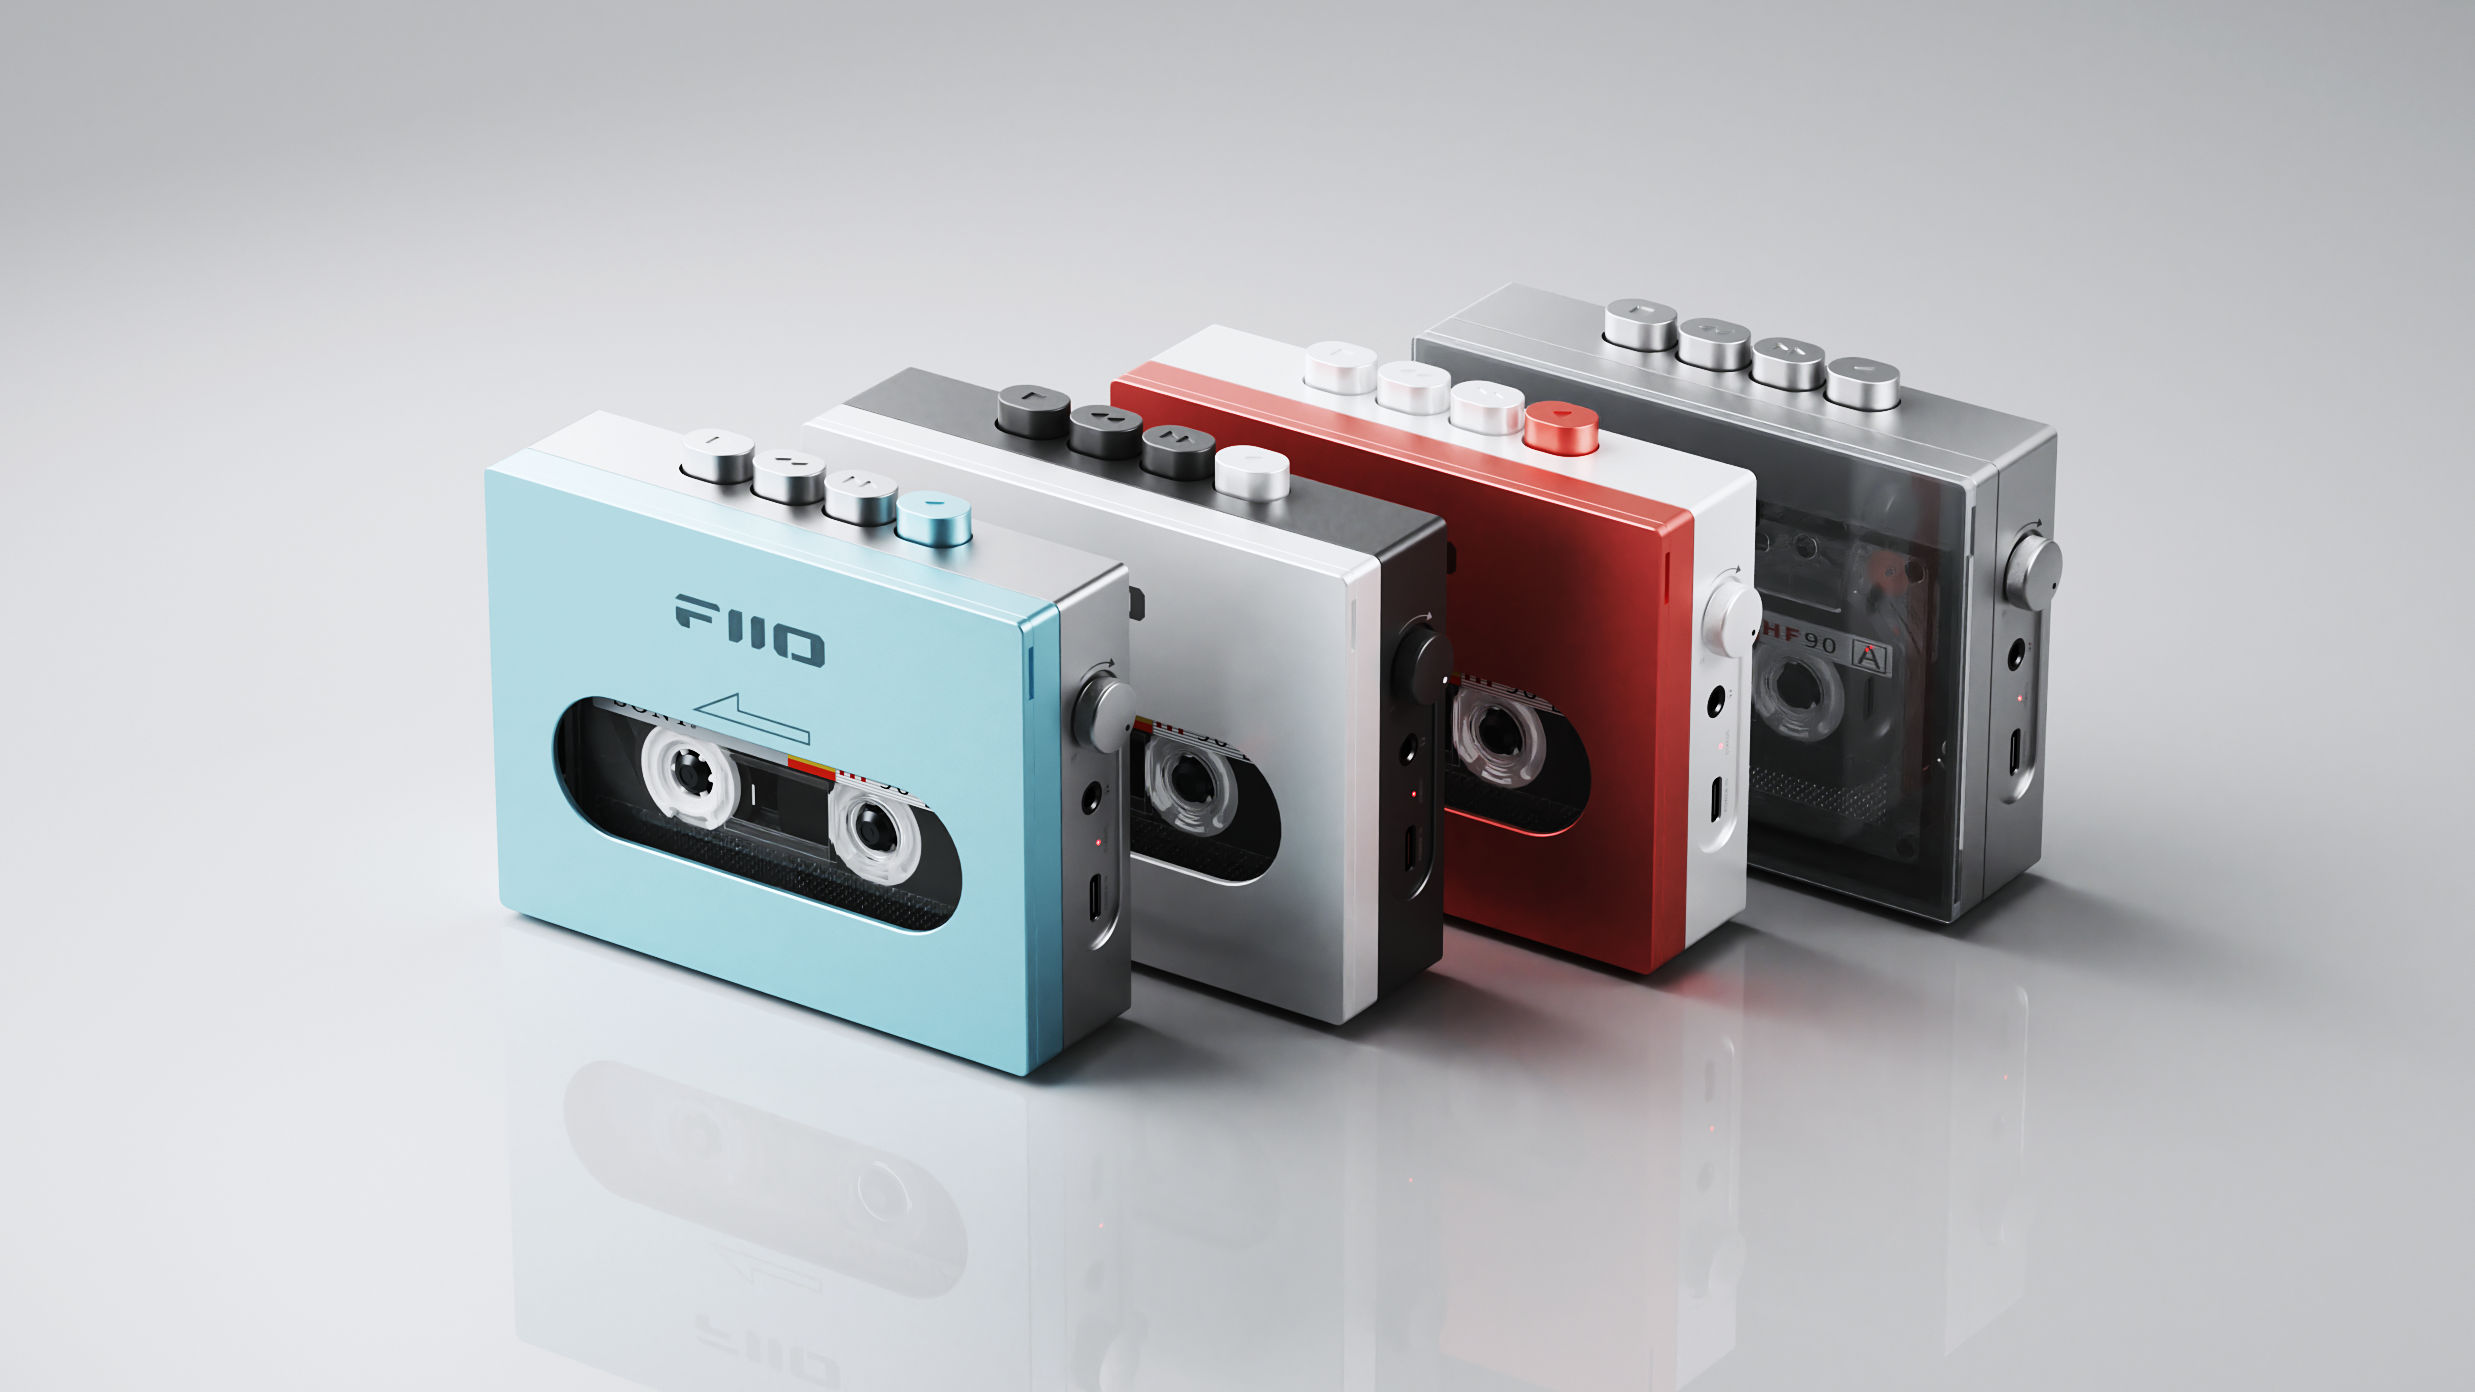 Audio Cassettes - Walkman Cassette Latest Price, Manufacturers & Suppliers